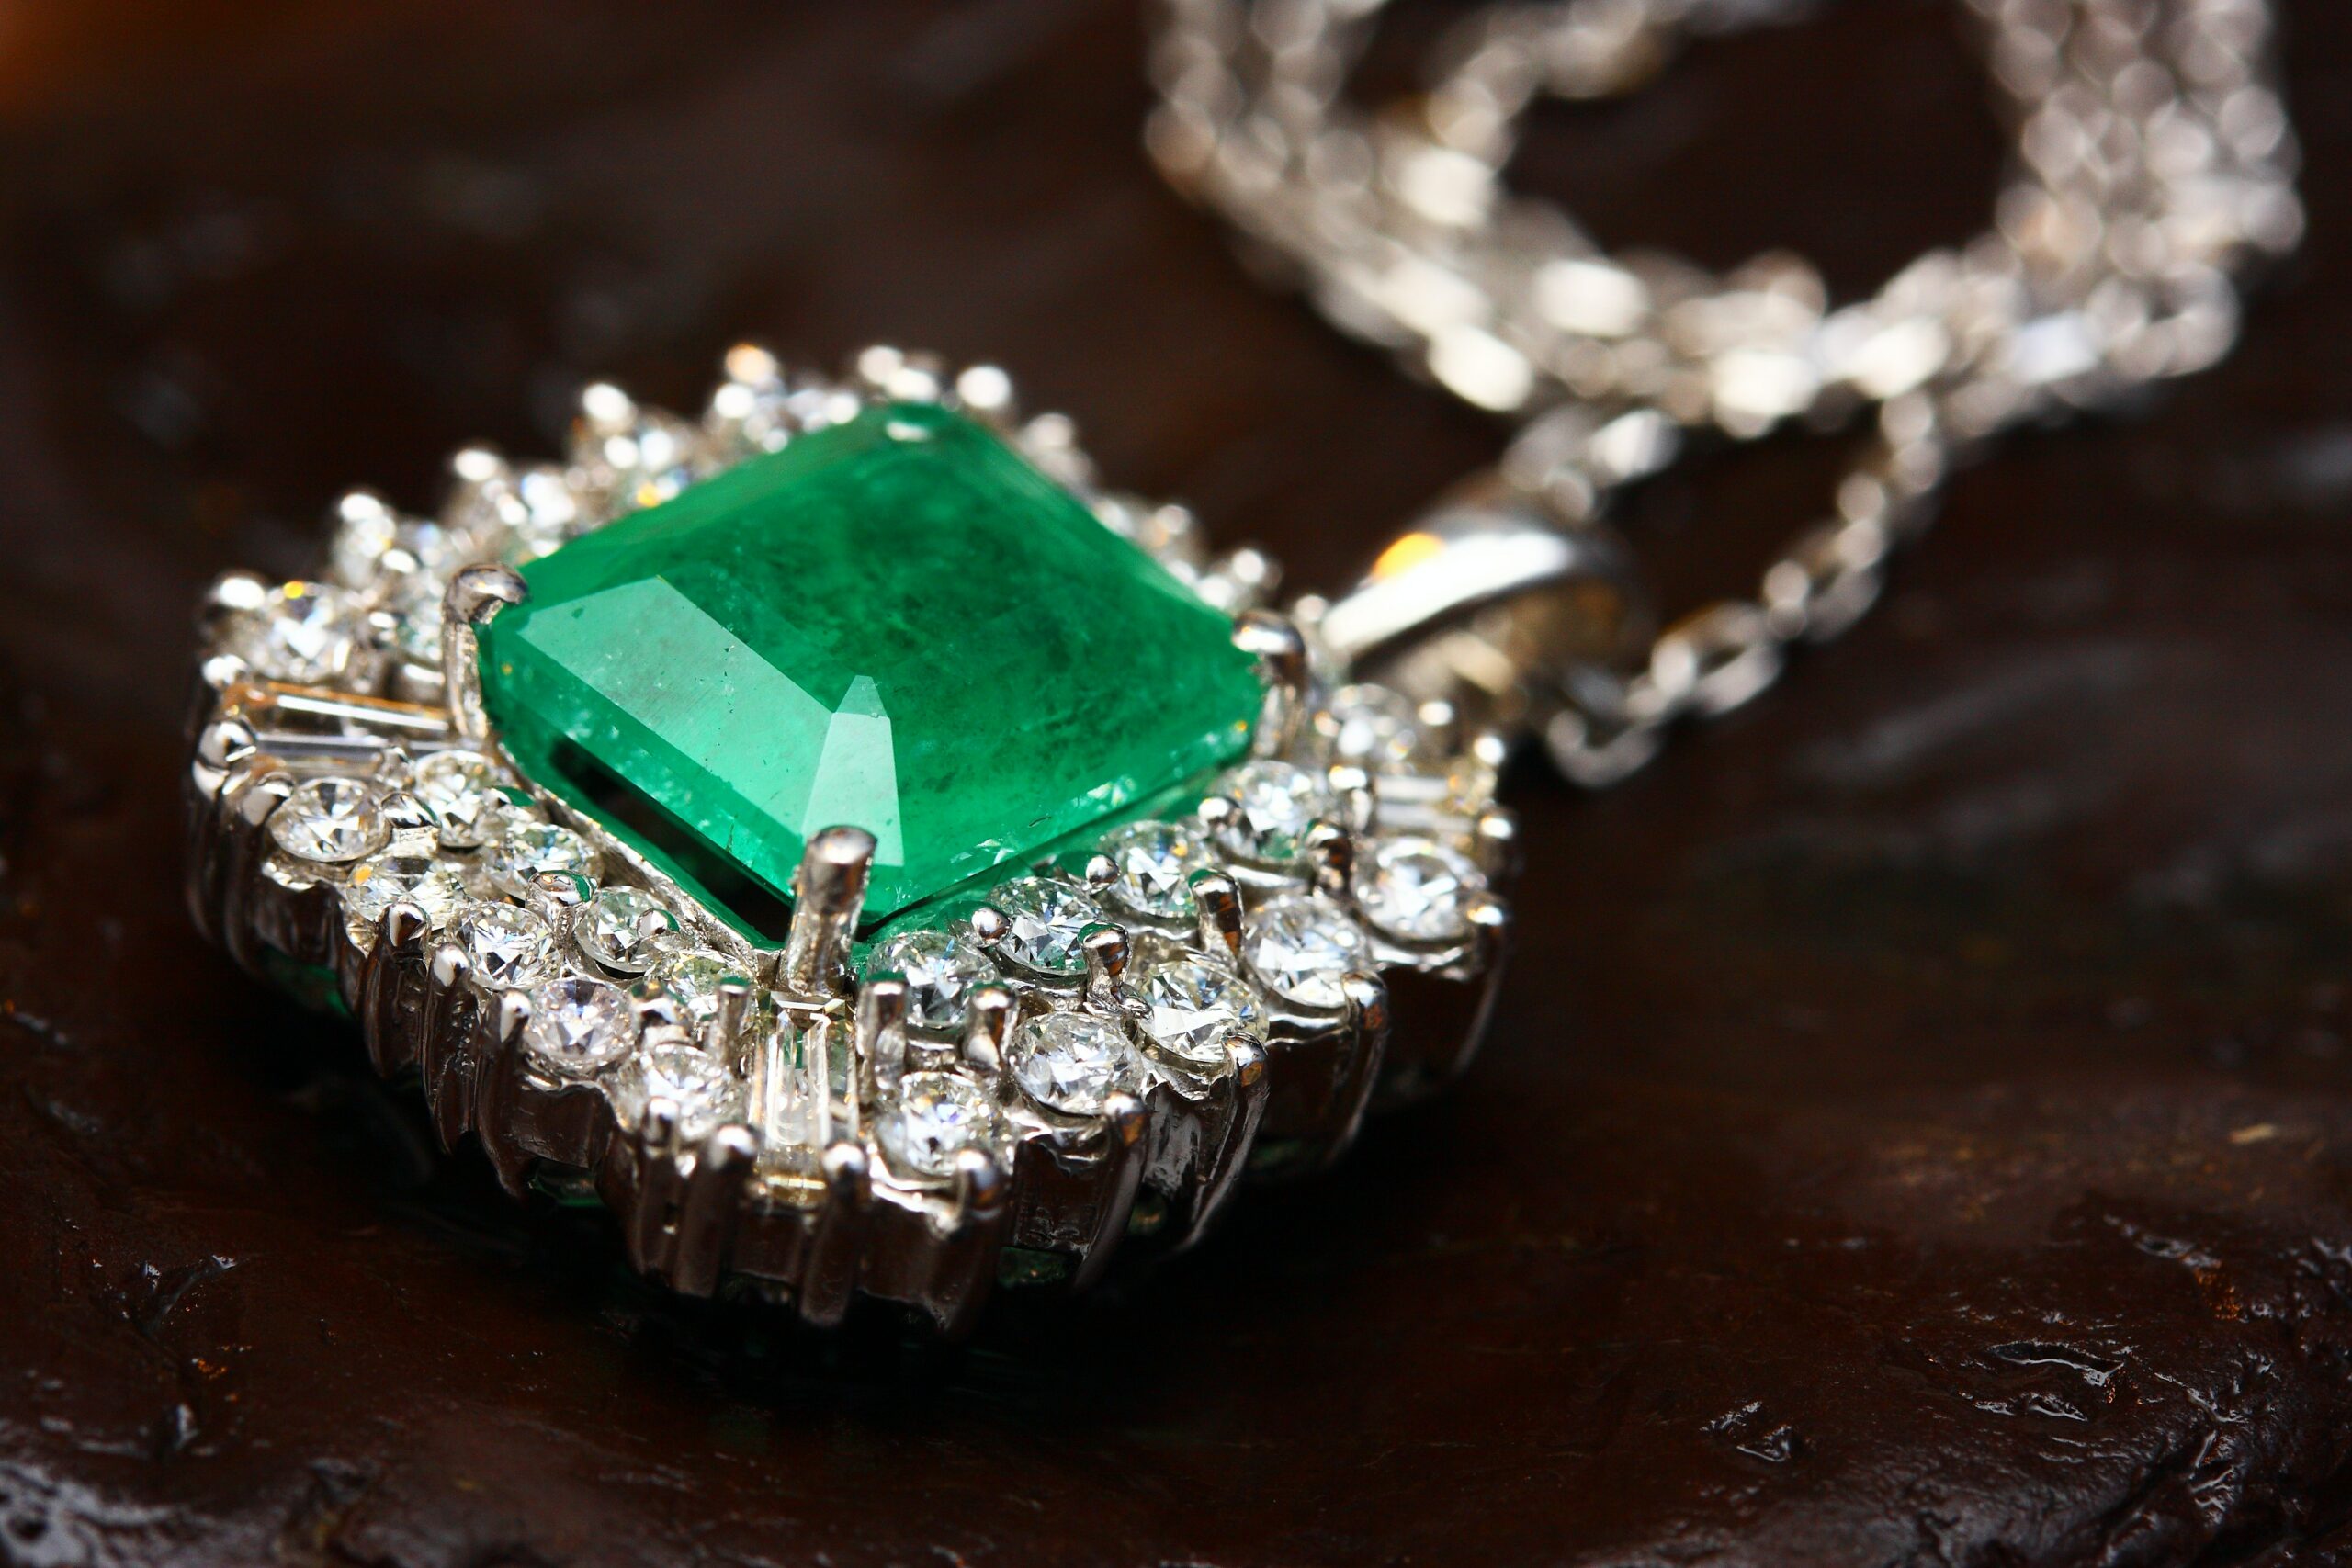 Green Gemstones List – My Top 10